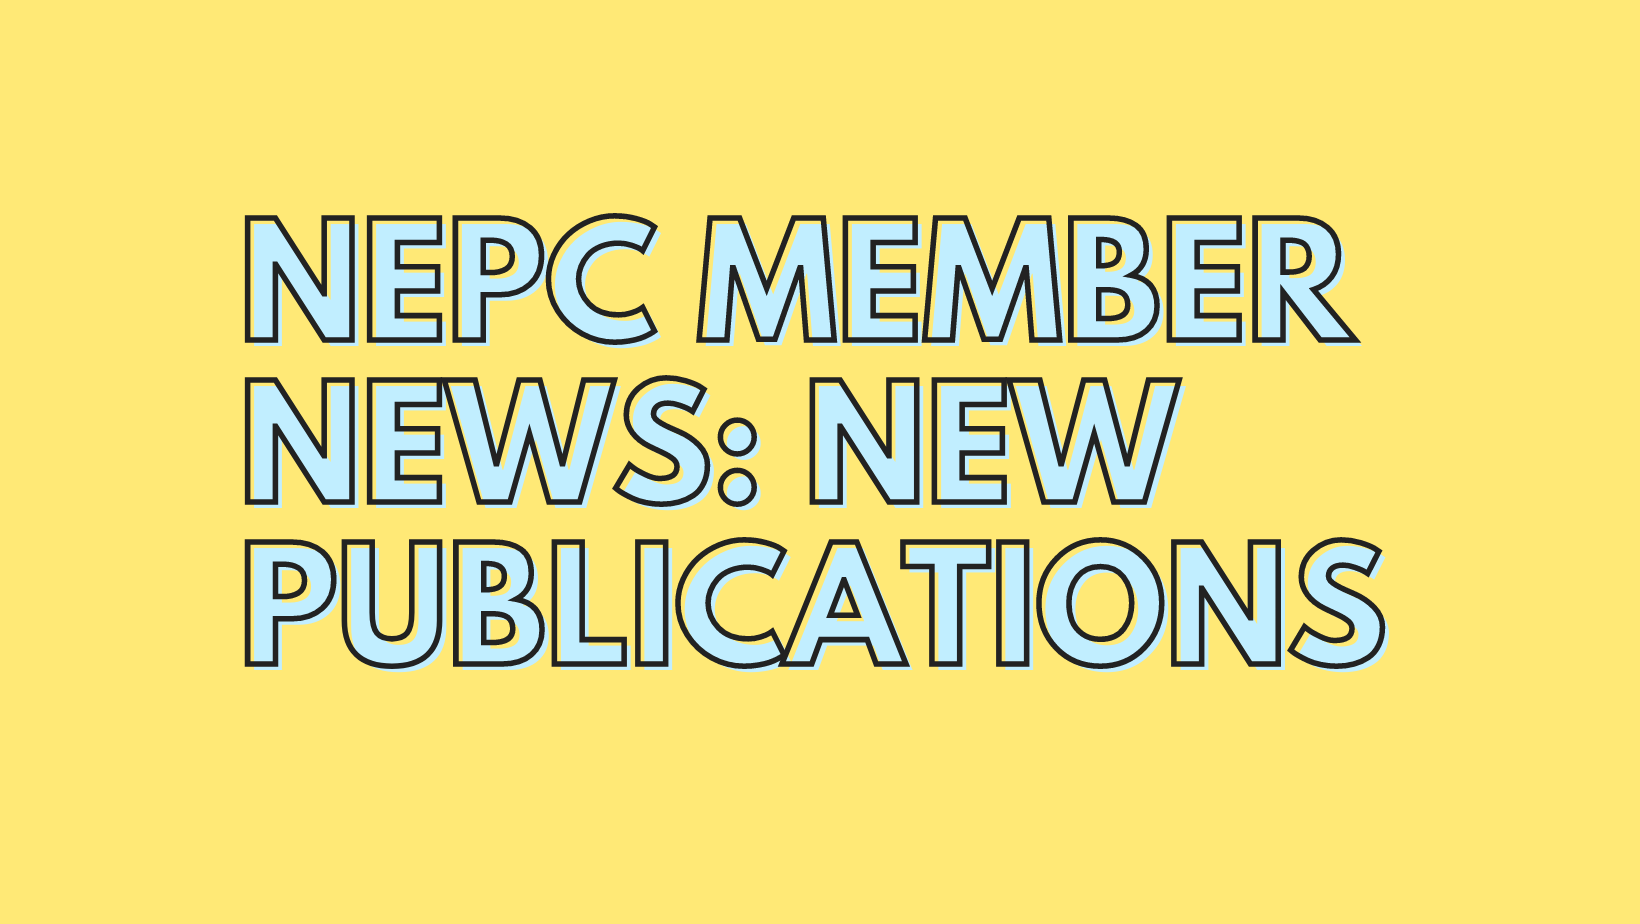 Member Publication News for October